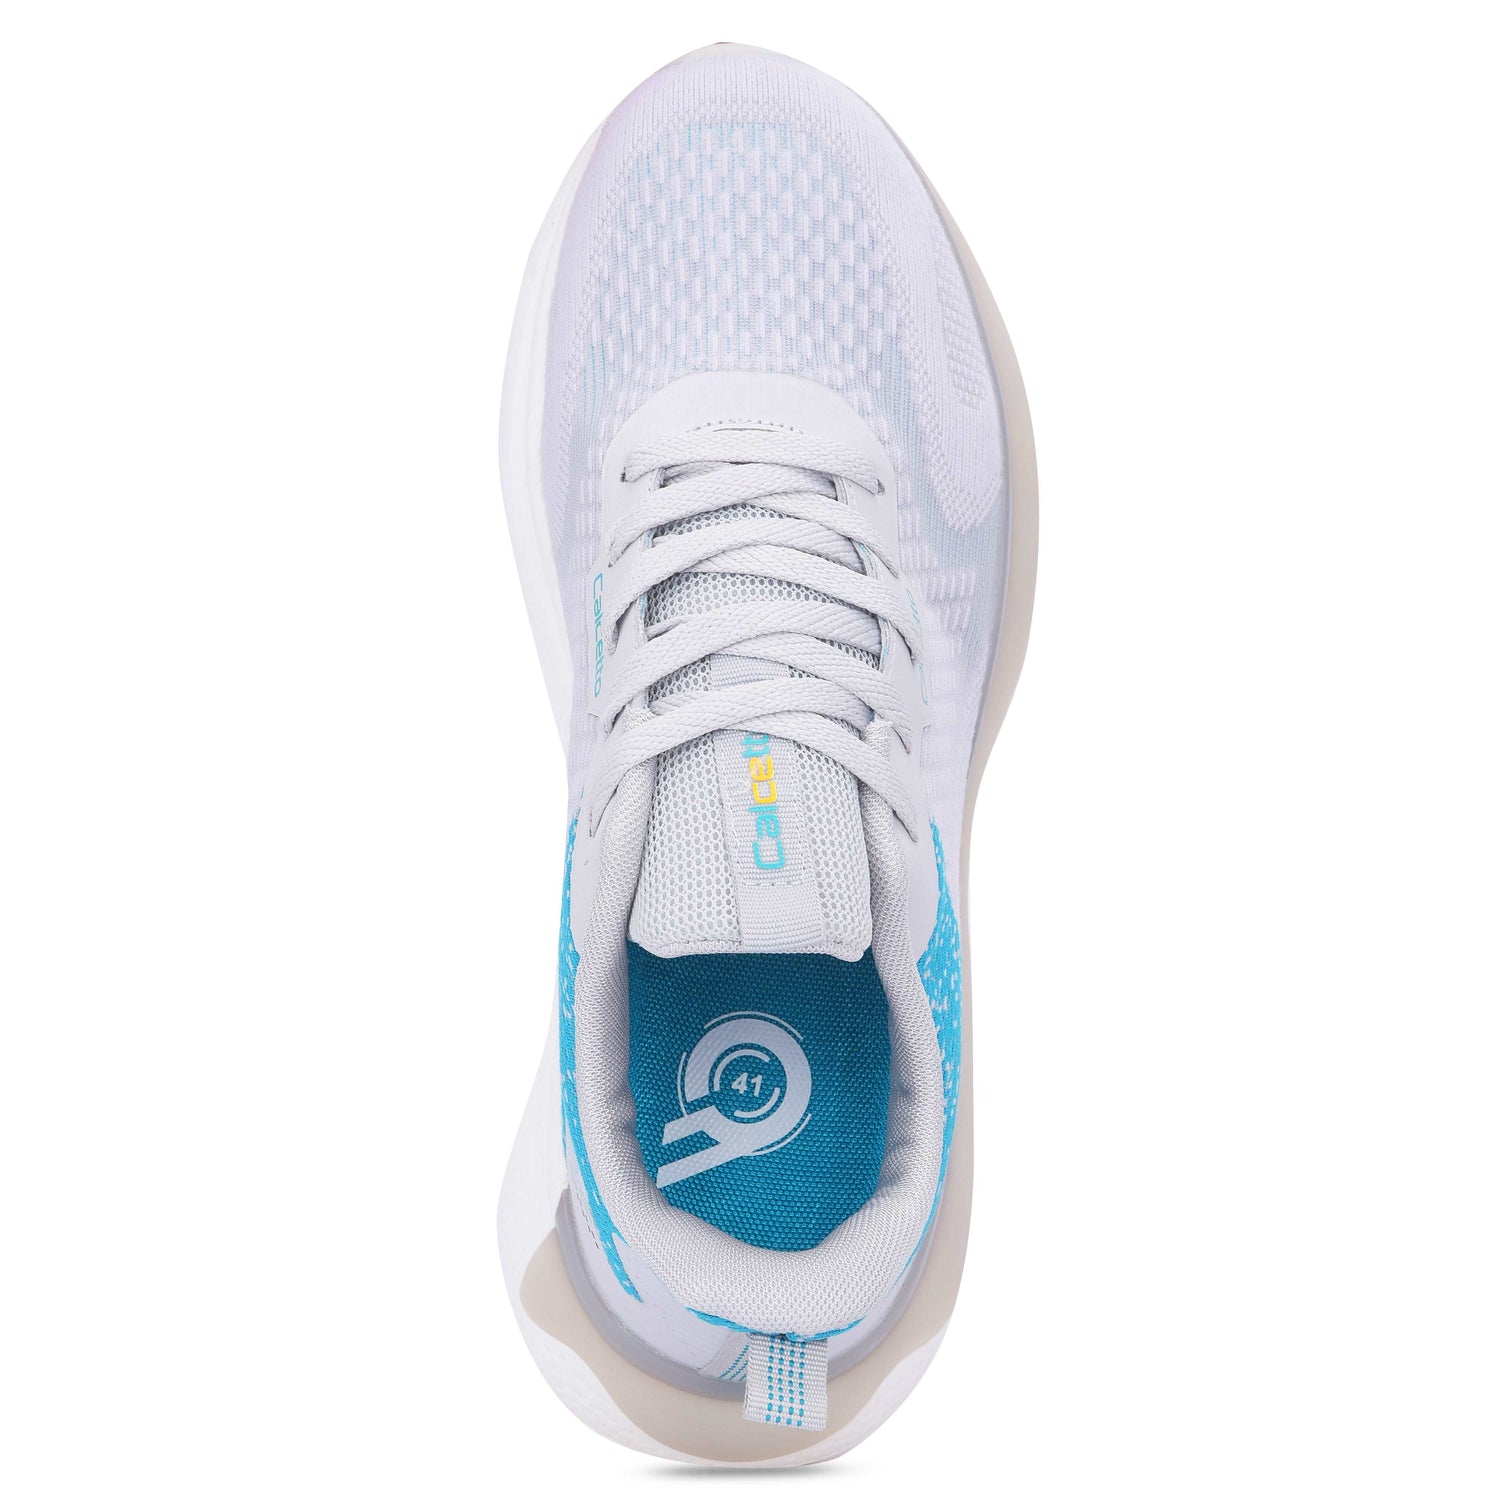 Calcetto CLT-0986 L Grey Sea Gre Running Sports Shoe For Men